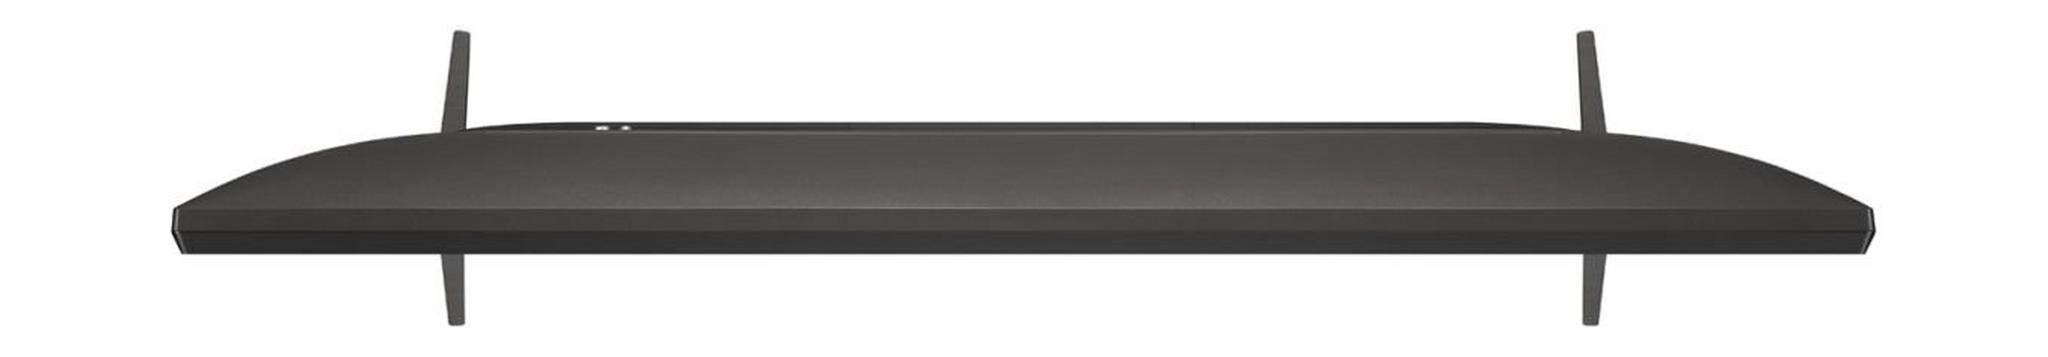 LG 49 inch Ultra HD Smart LED TV - 49UK6300PVB